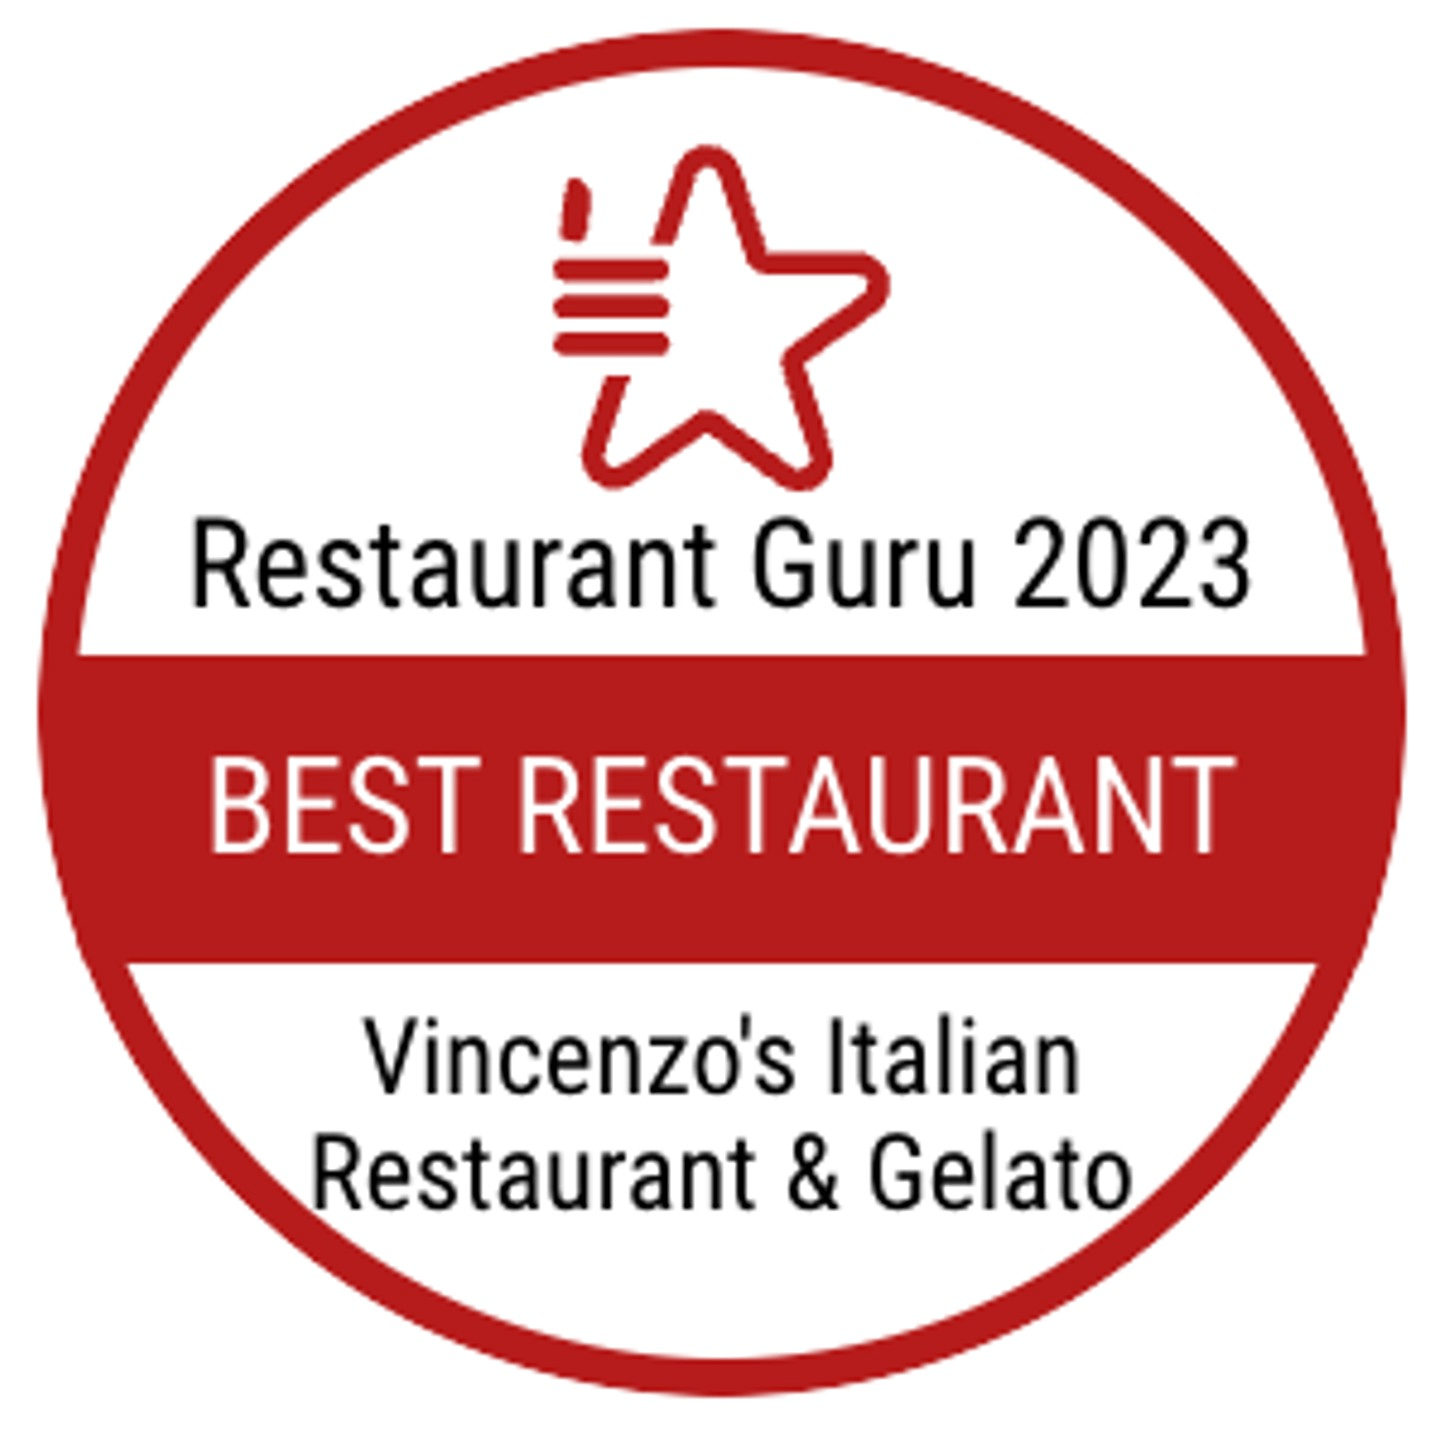 Best Restaurant of 2023!